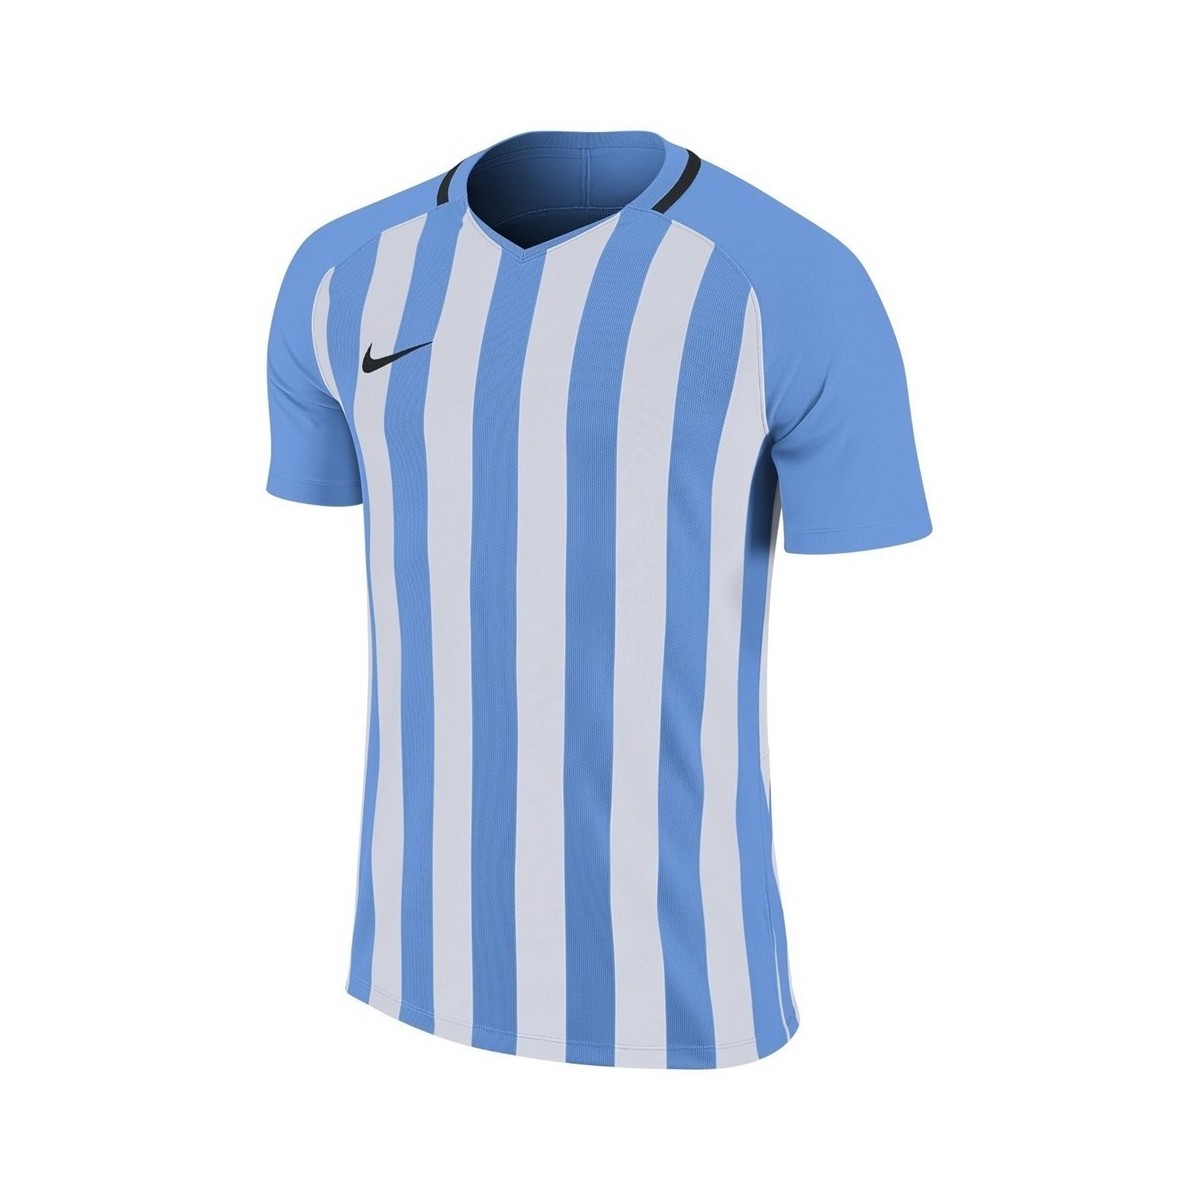 Vêtements Homme T-shirts manches courtes Nike Striped Division Jersey Iii Blanc, Bleu